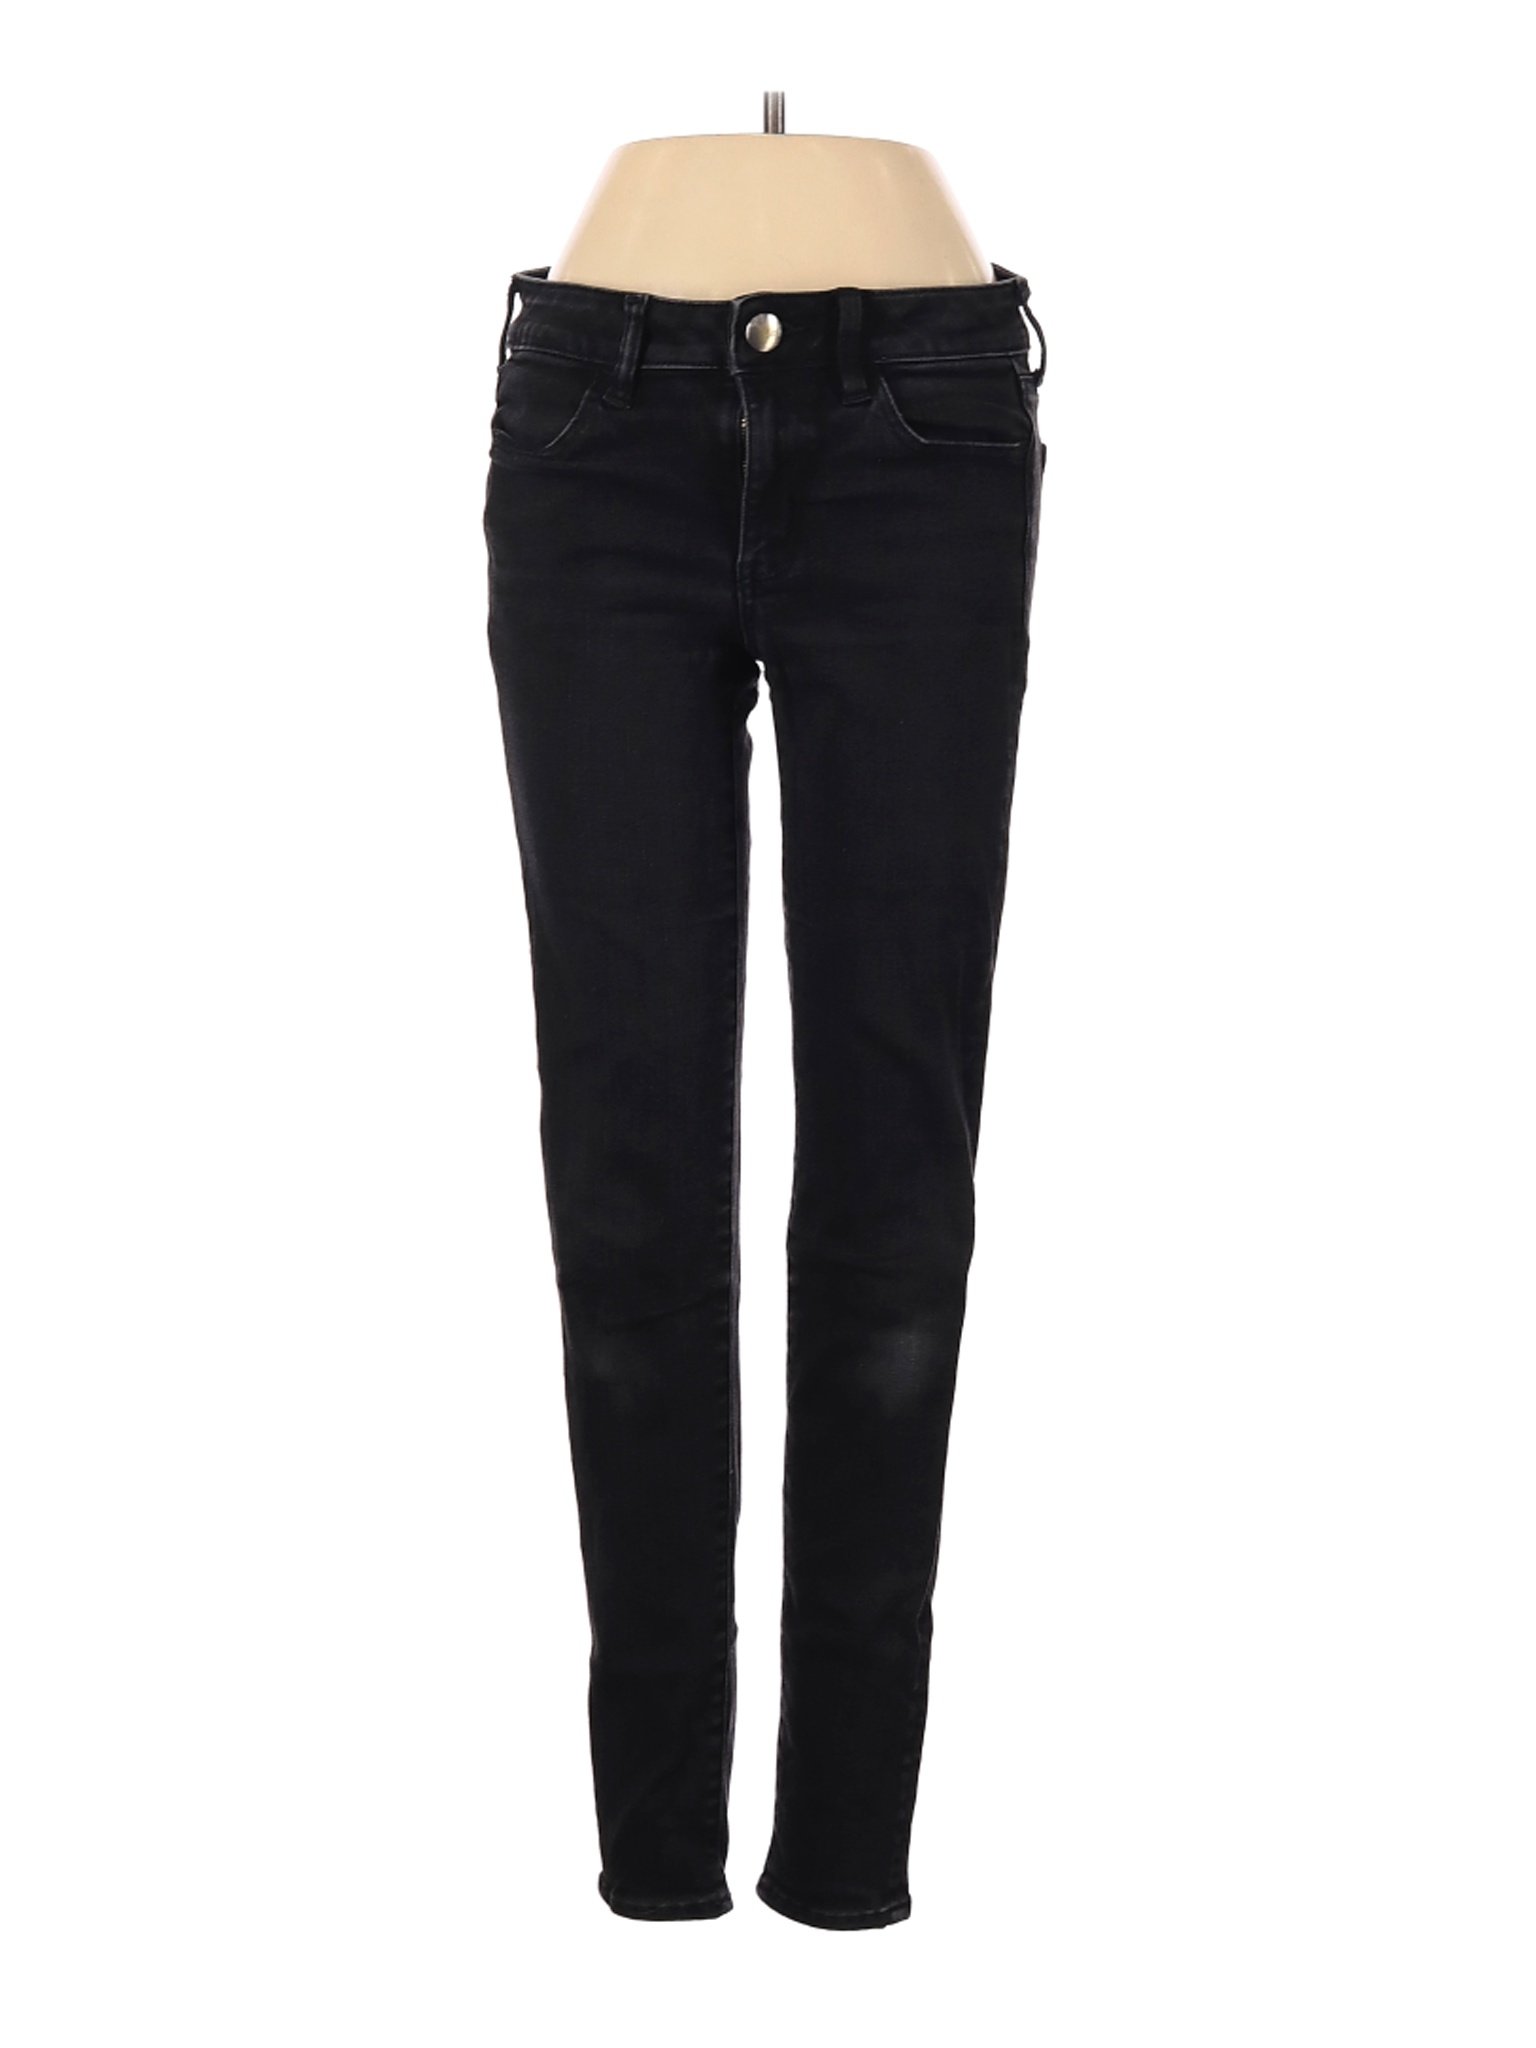 American Eagle Outfitters Women Black Jeans 4 | eBay